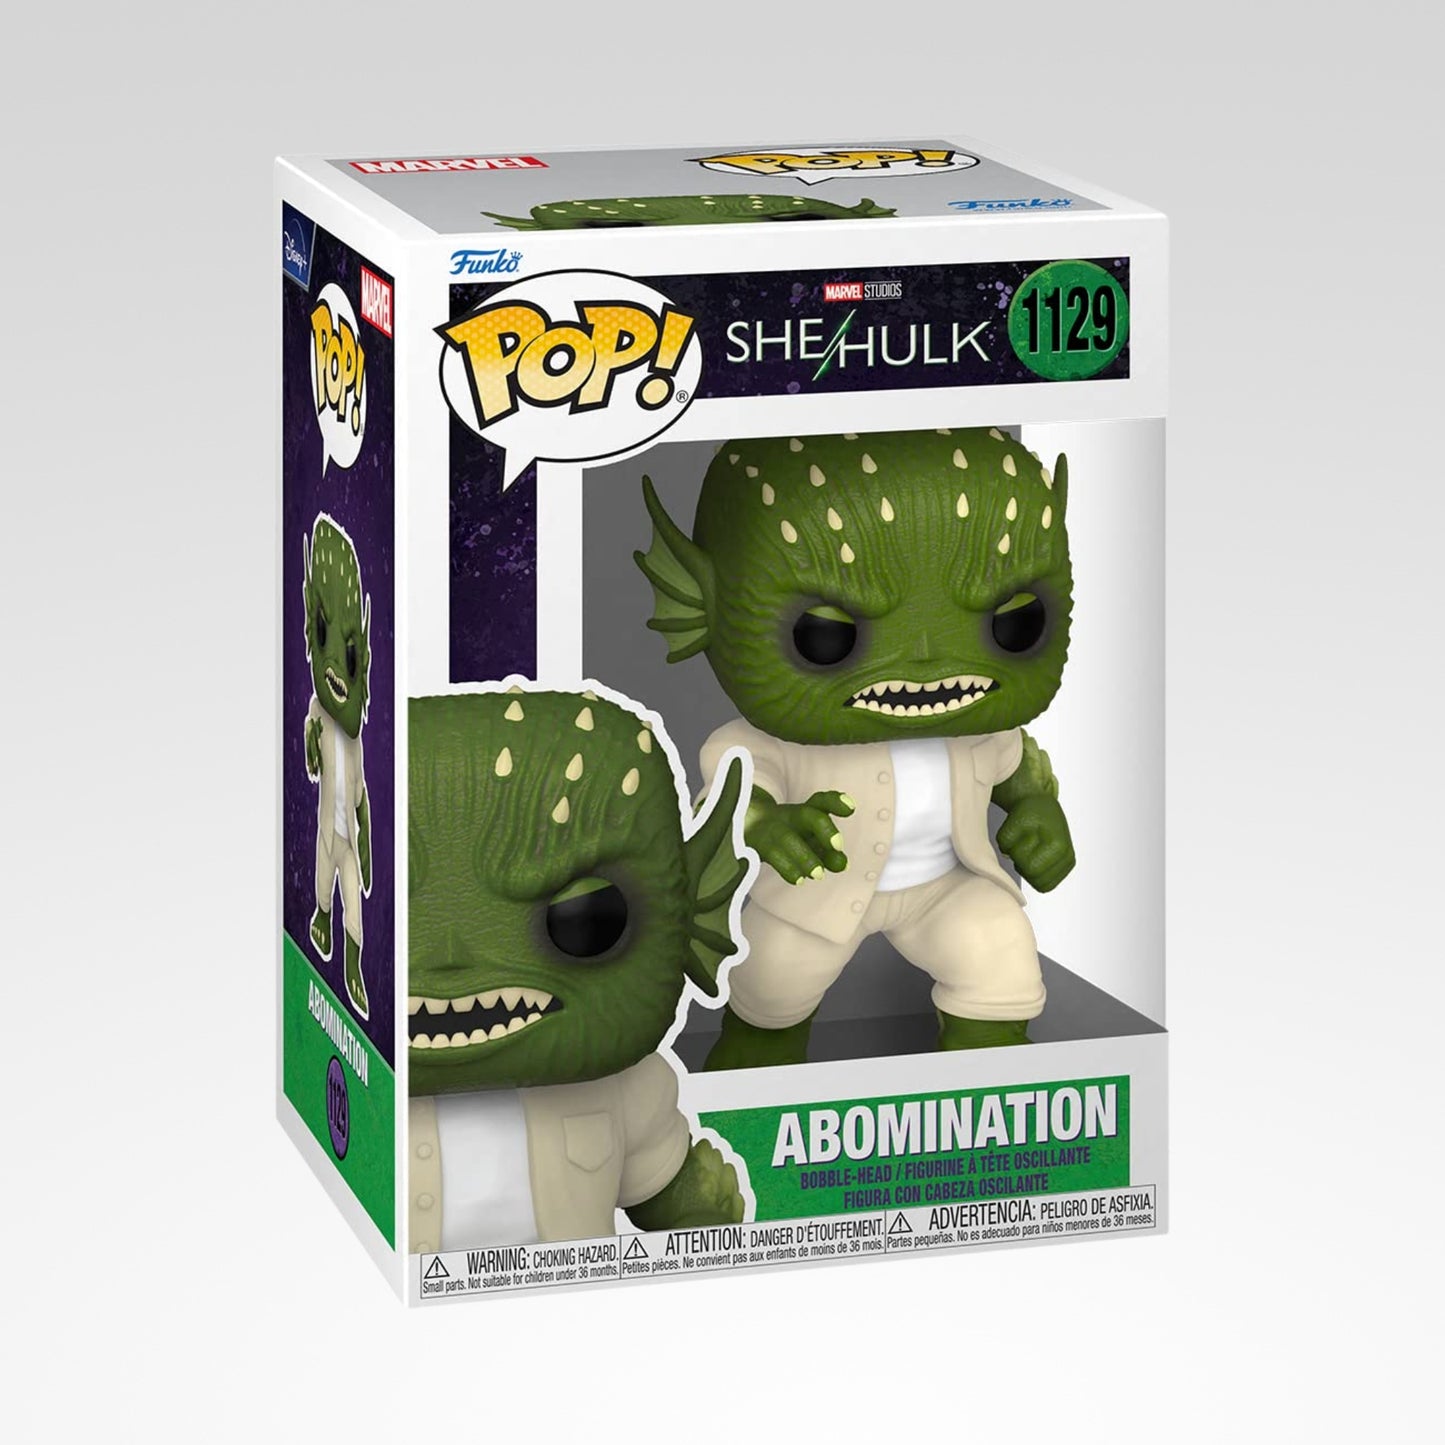 Abomination (She-Hulk) Marvel Funko Pop!